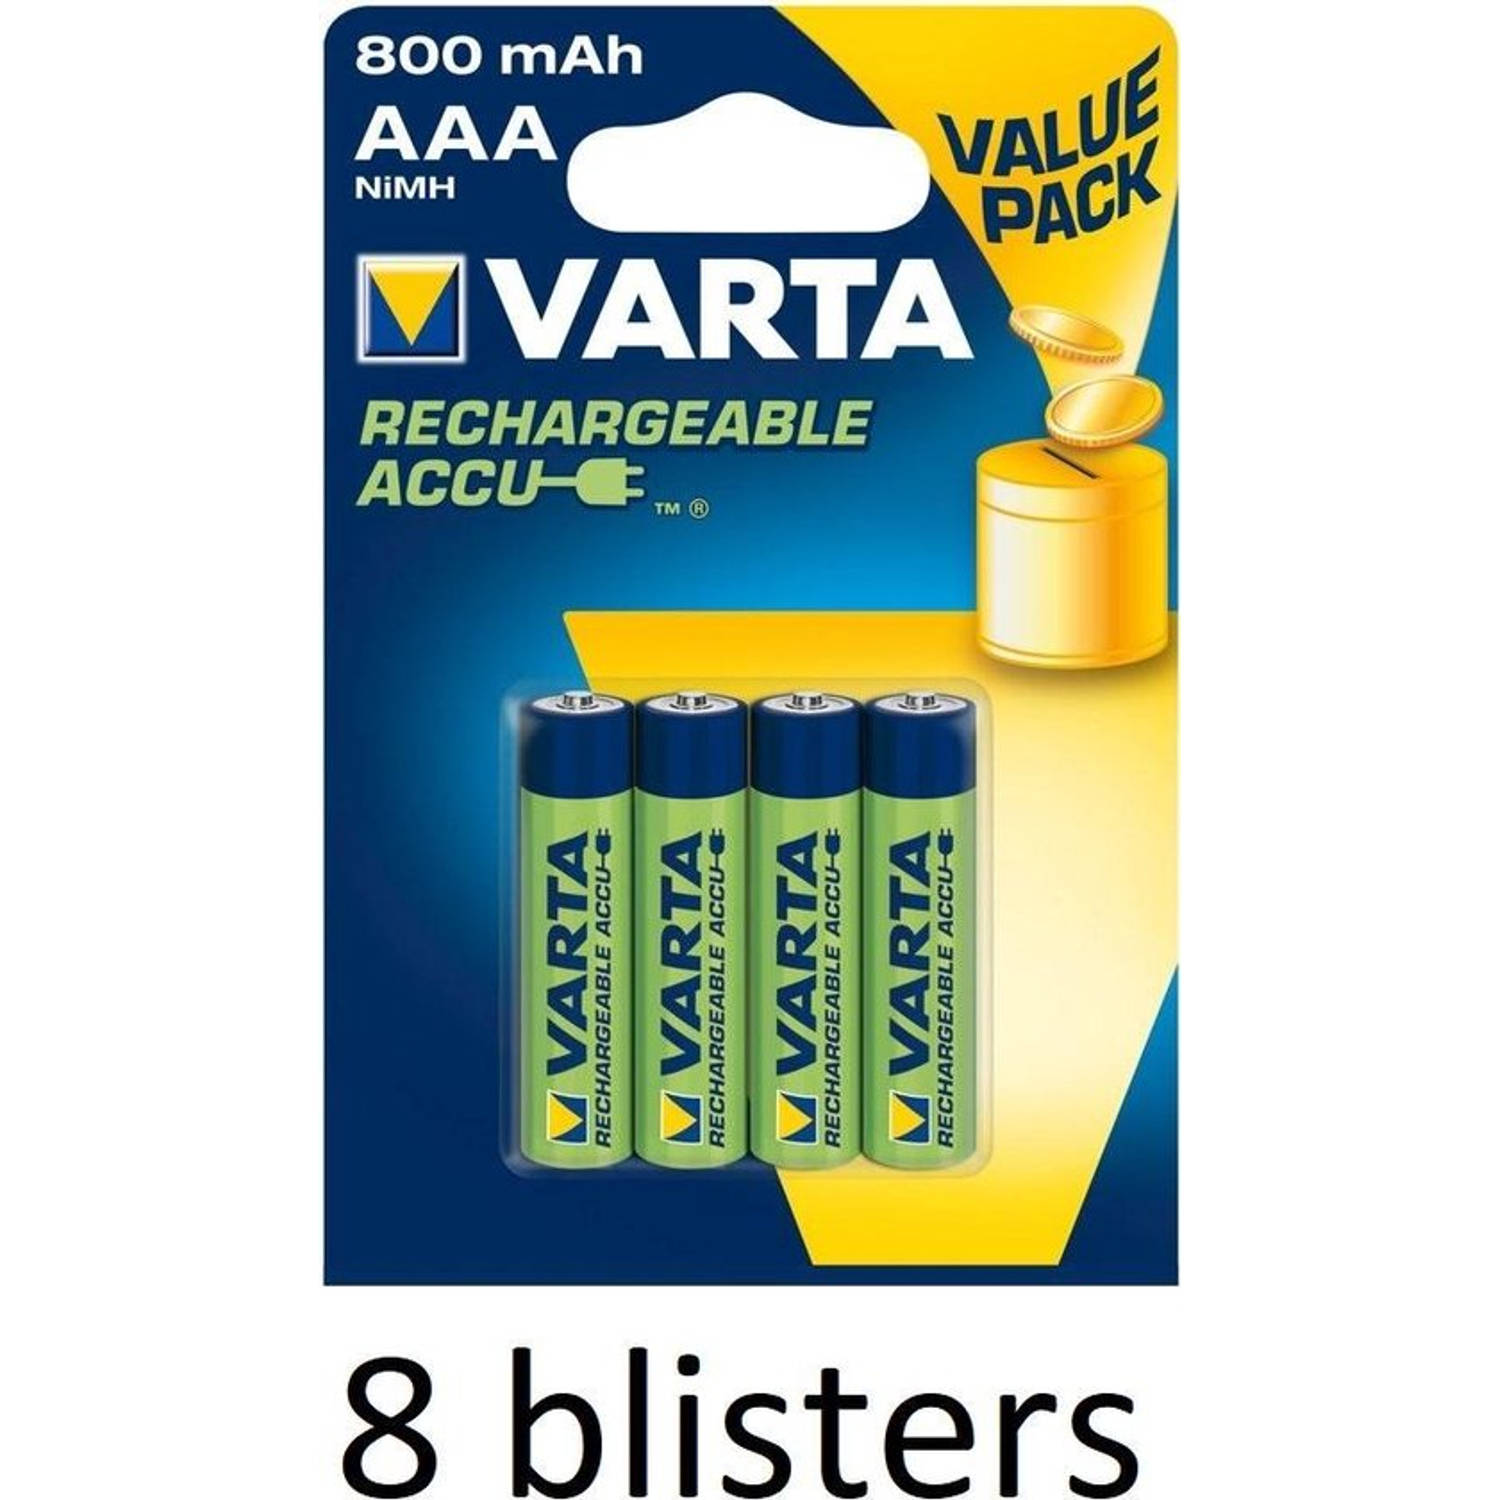 32 stuks (8 blisters a 4 stuks) Varta Rechargeable Accu AAA 800 mAh